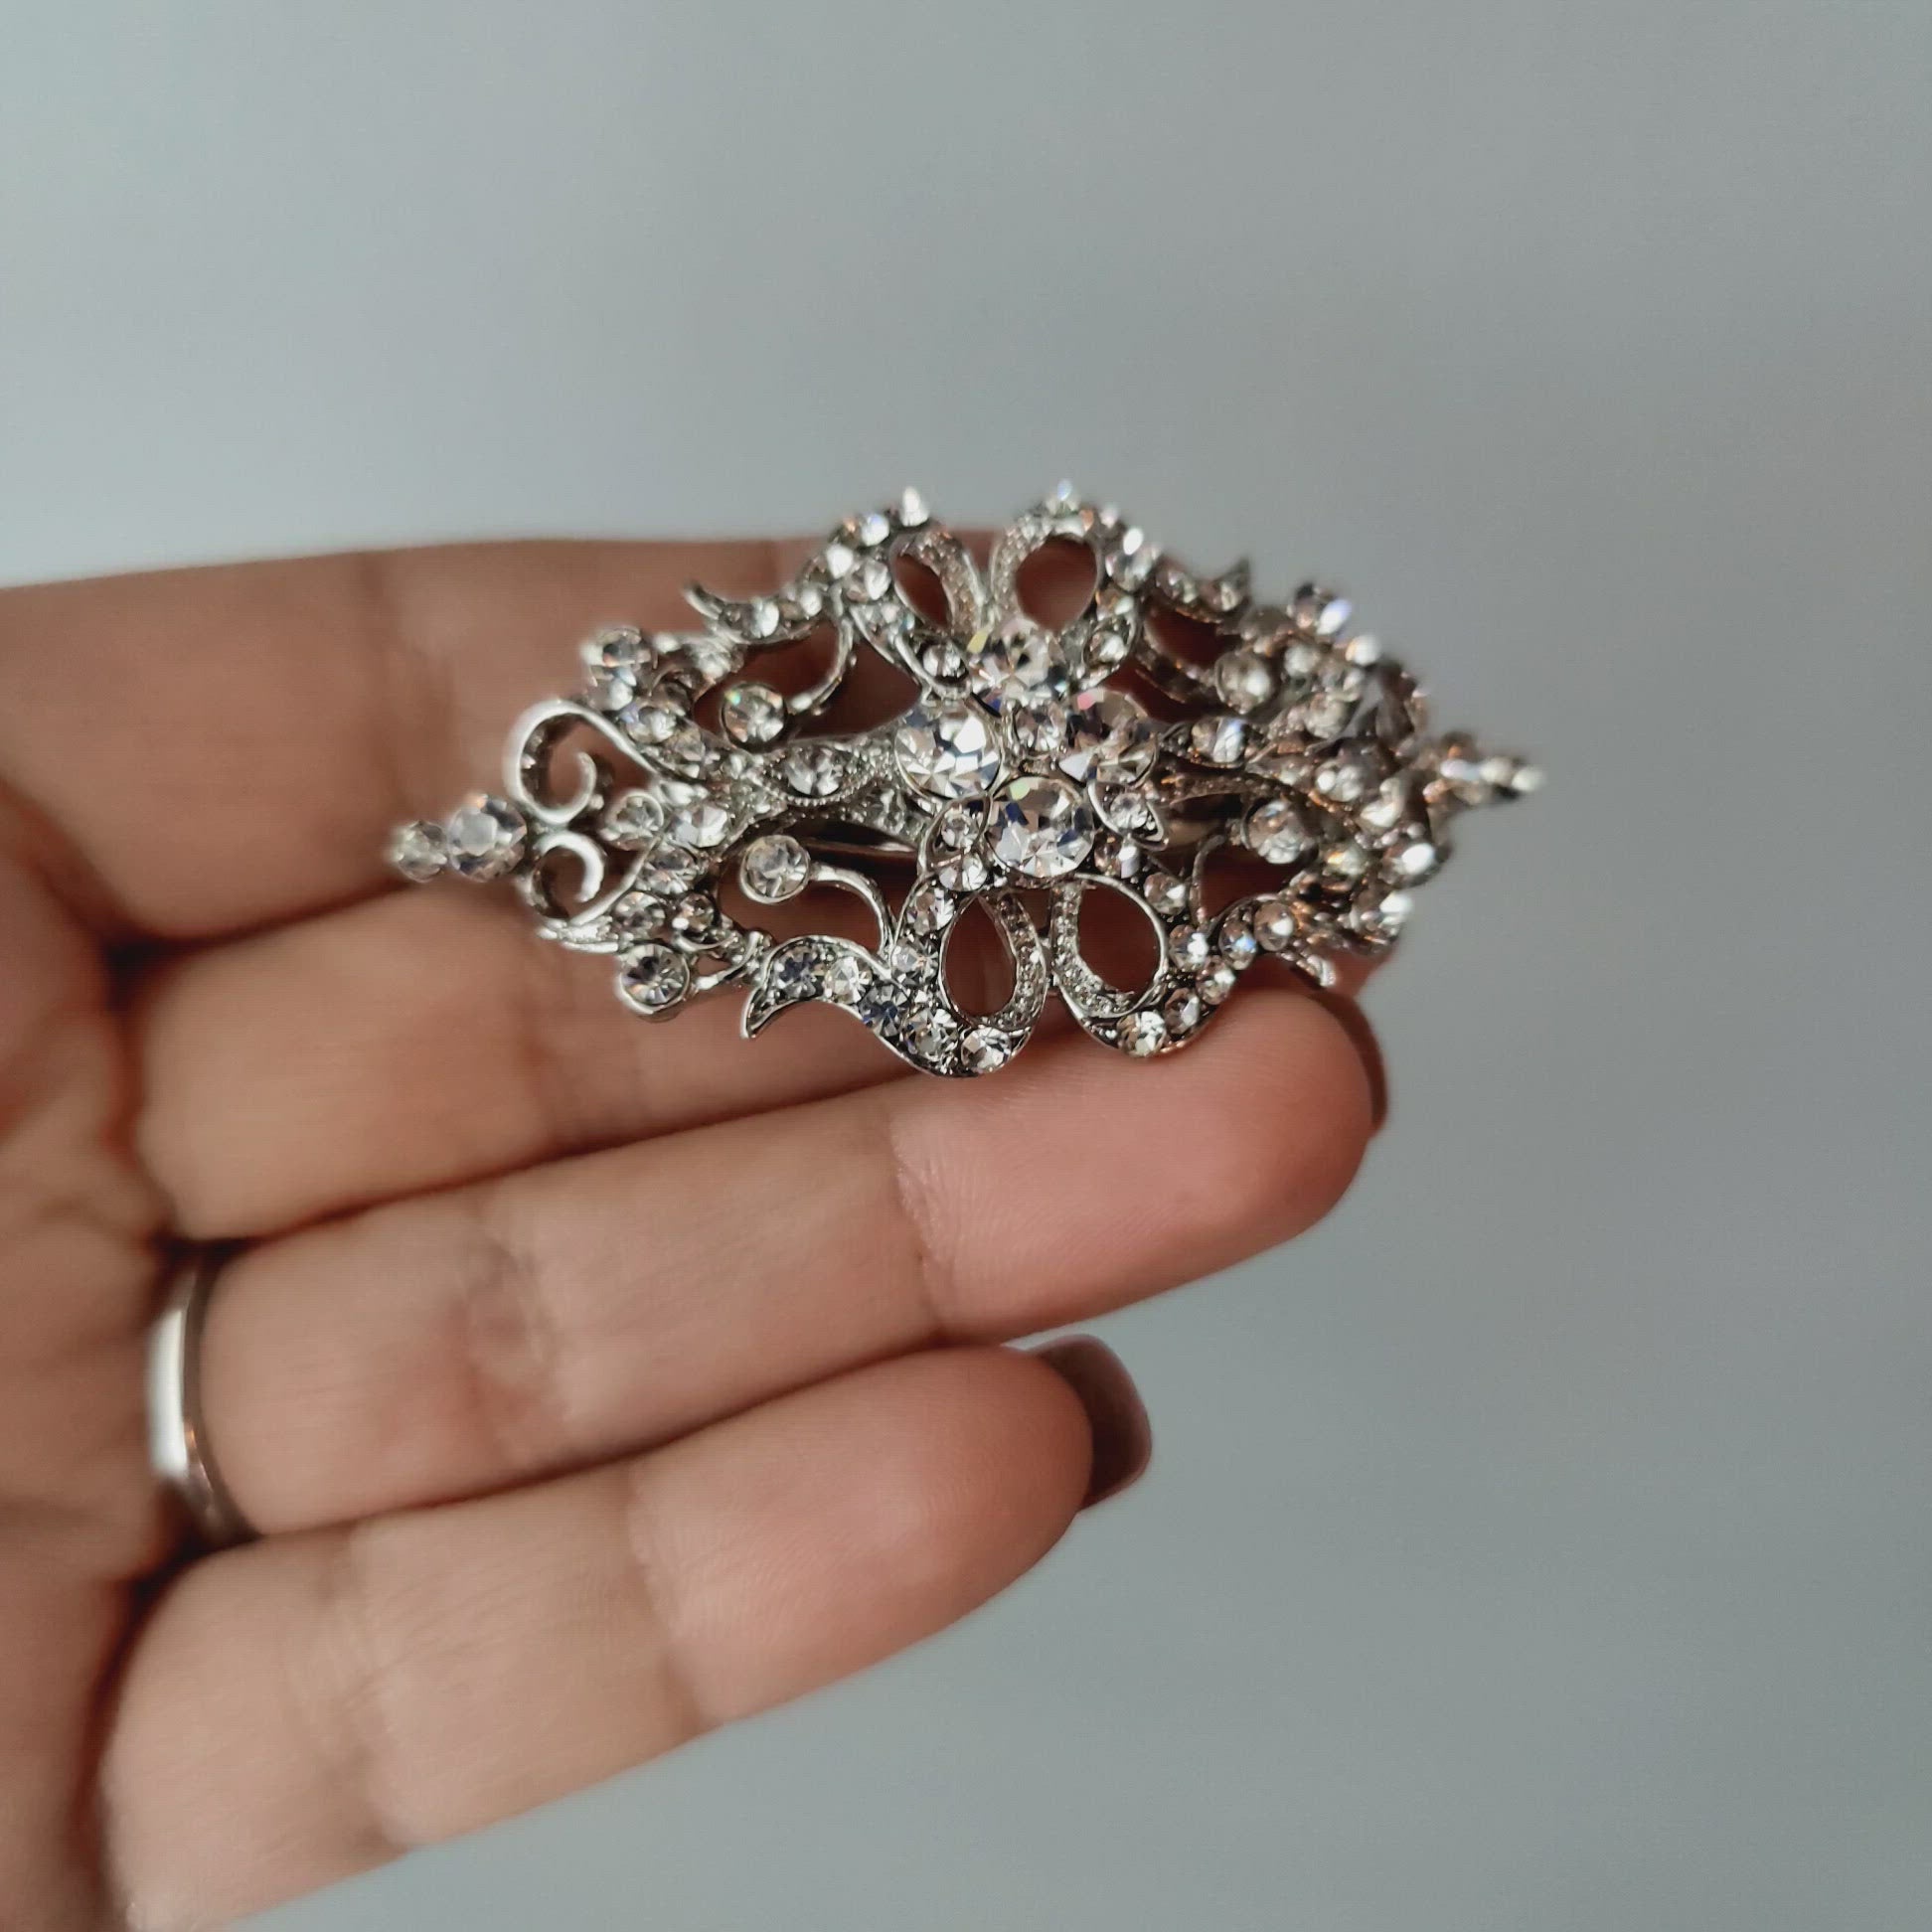 Petite Bridal Hair Clip in Antique Silver